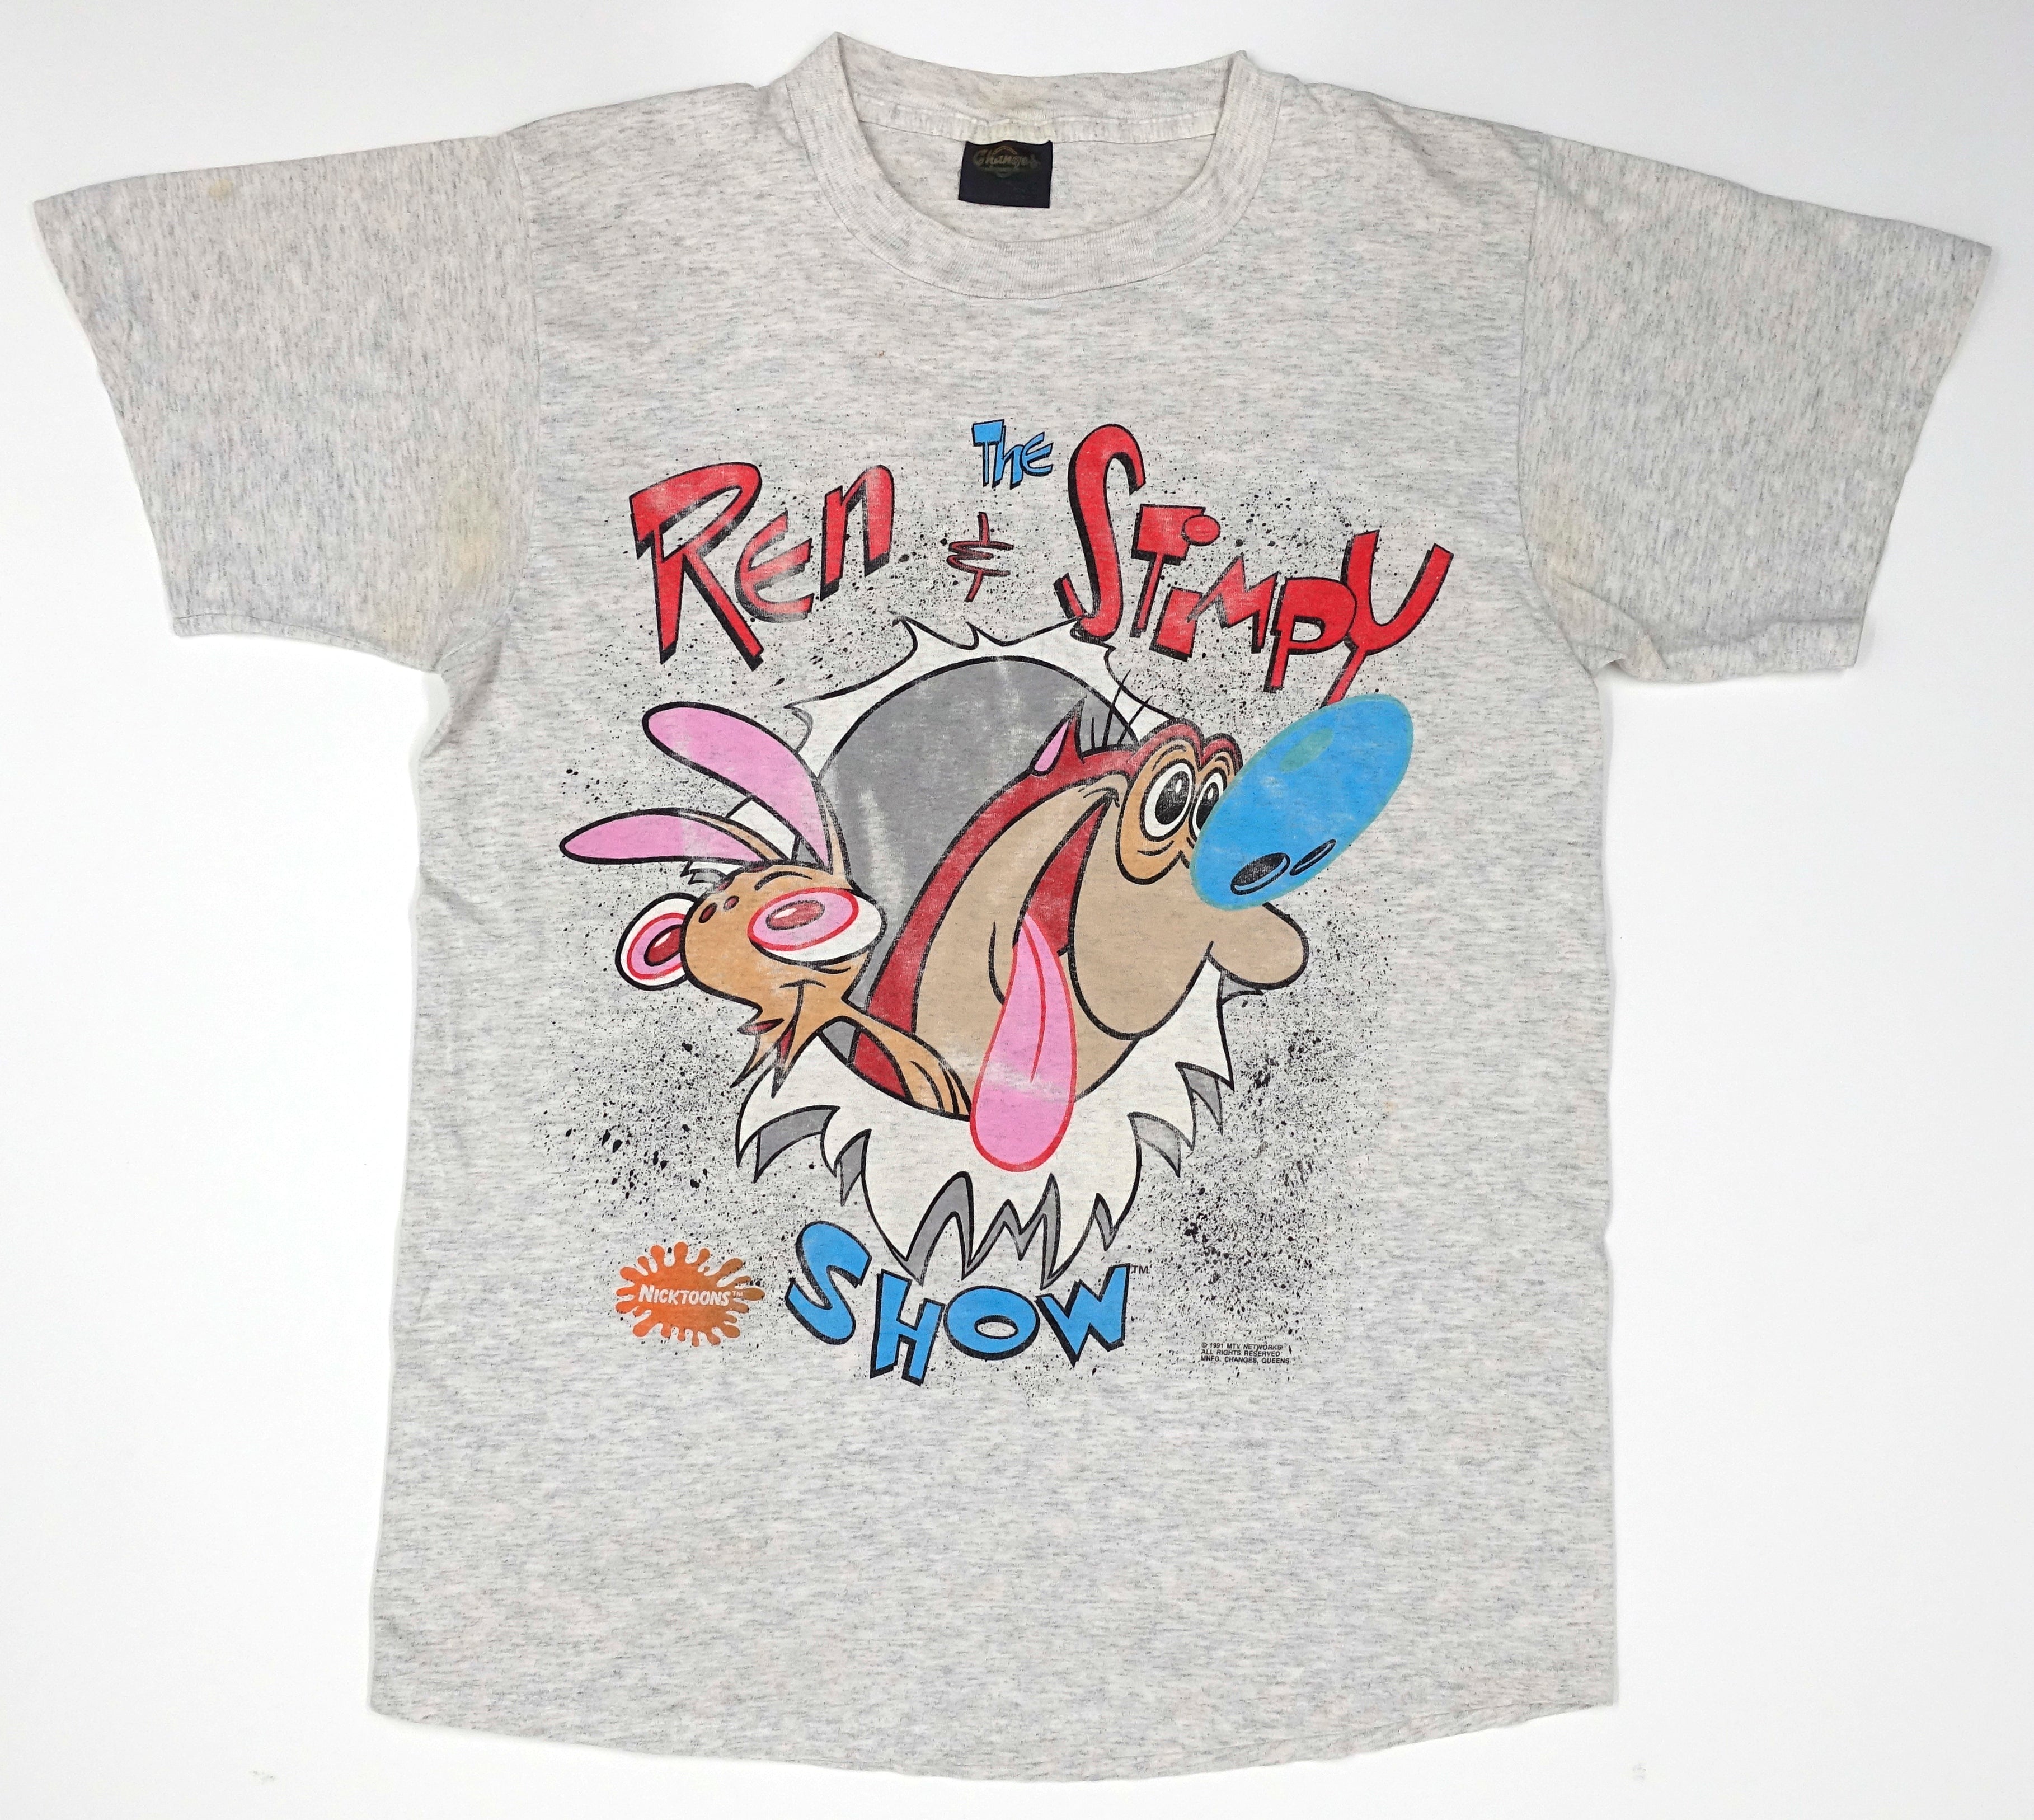 Ren & Stimpy - the Ren & Stimpy Show ©1991 Shirt Size Large